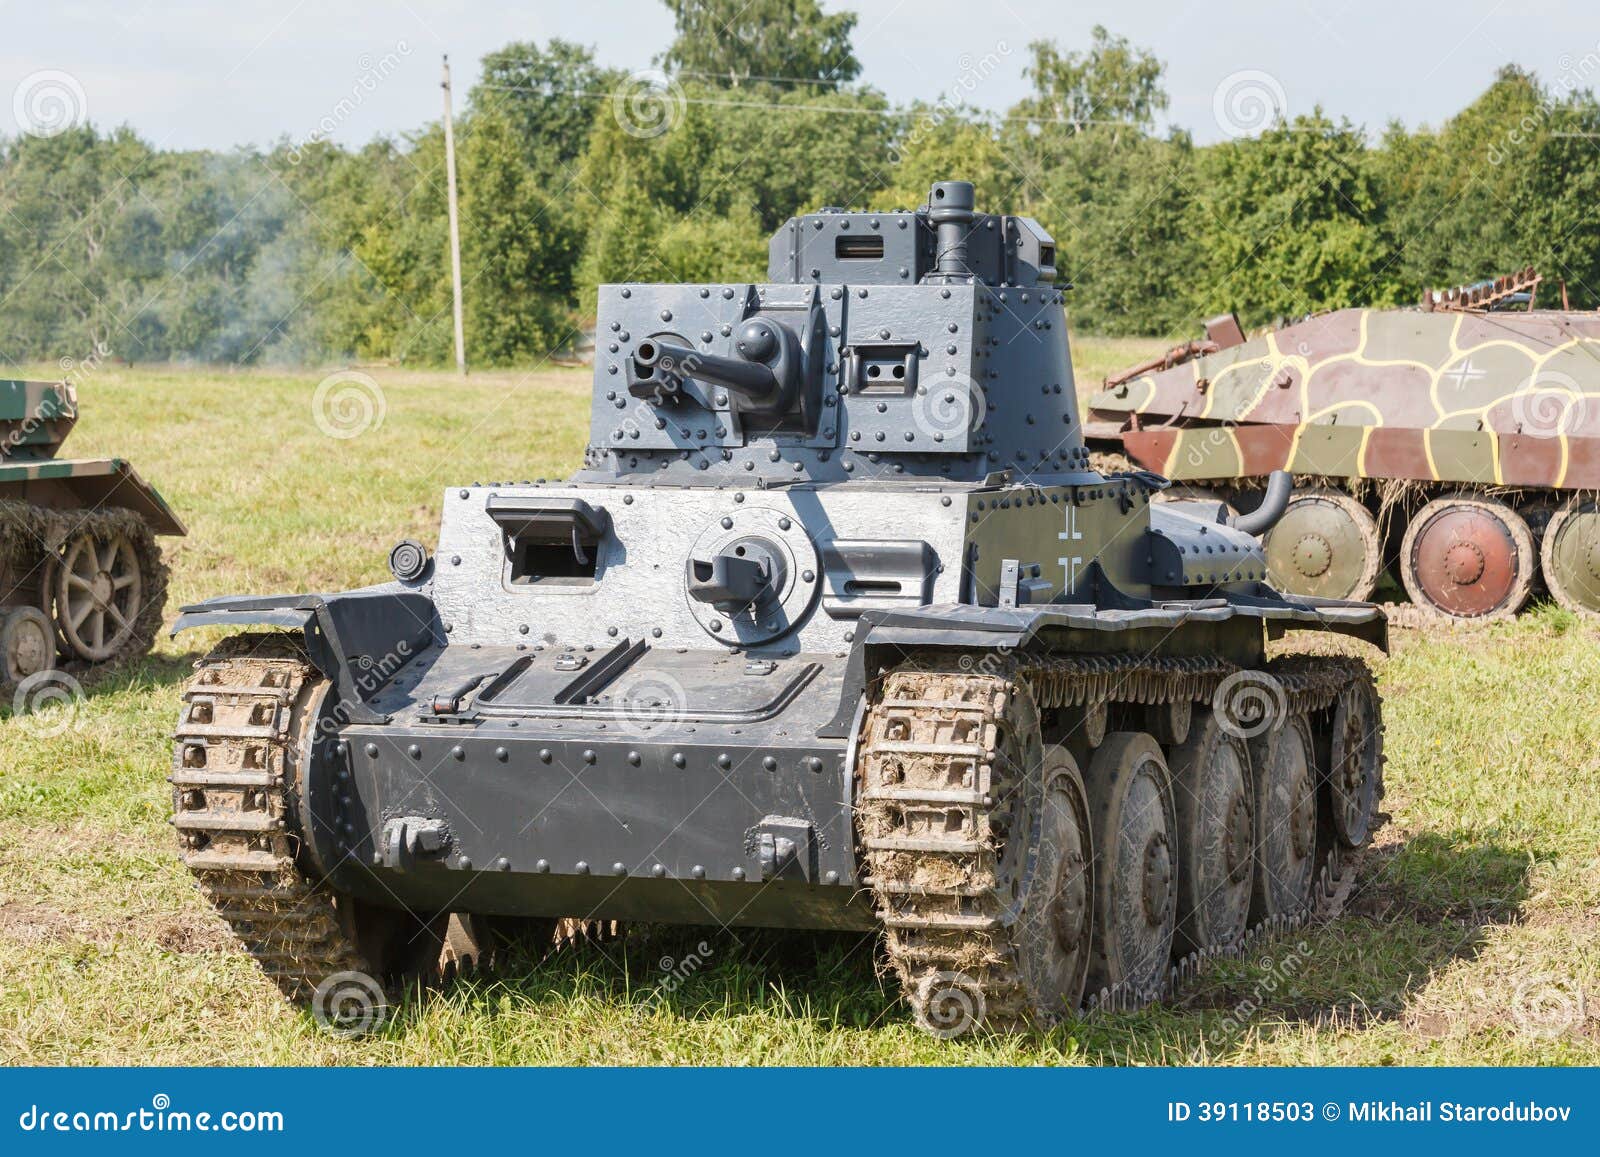 WW2 Panzer 38 (t) Light Tank Stock - Image beast, panzer: 39118503